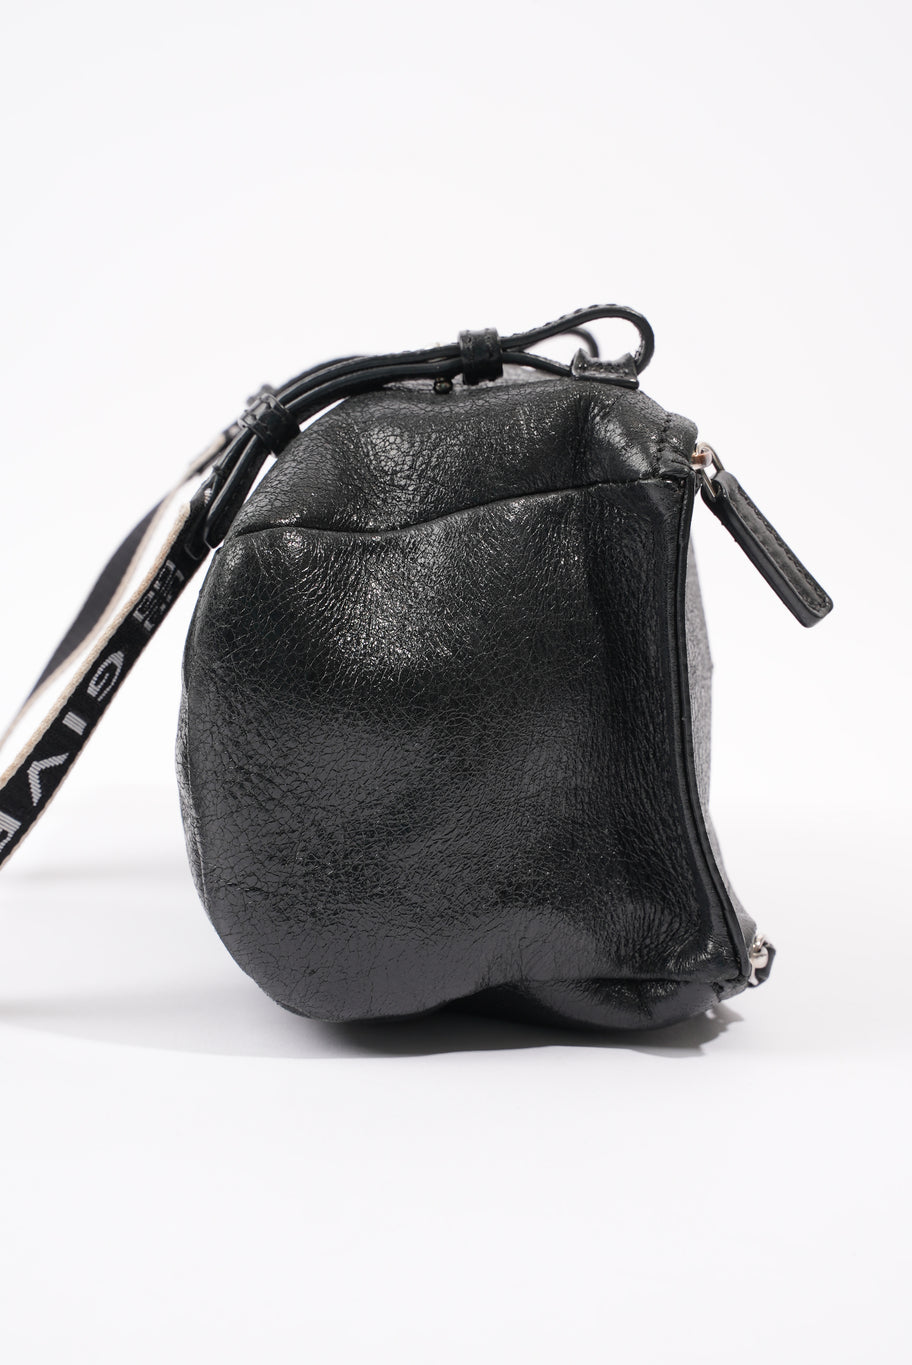 Pandora Bag Black Leather Small Image 5